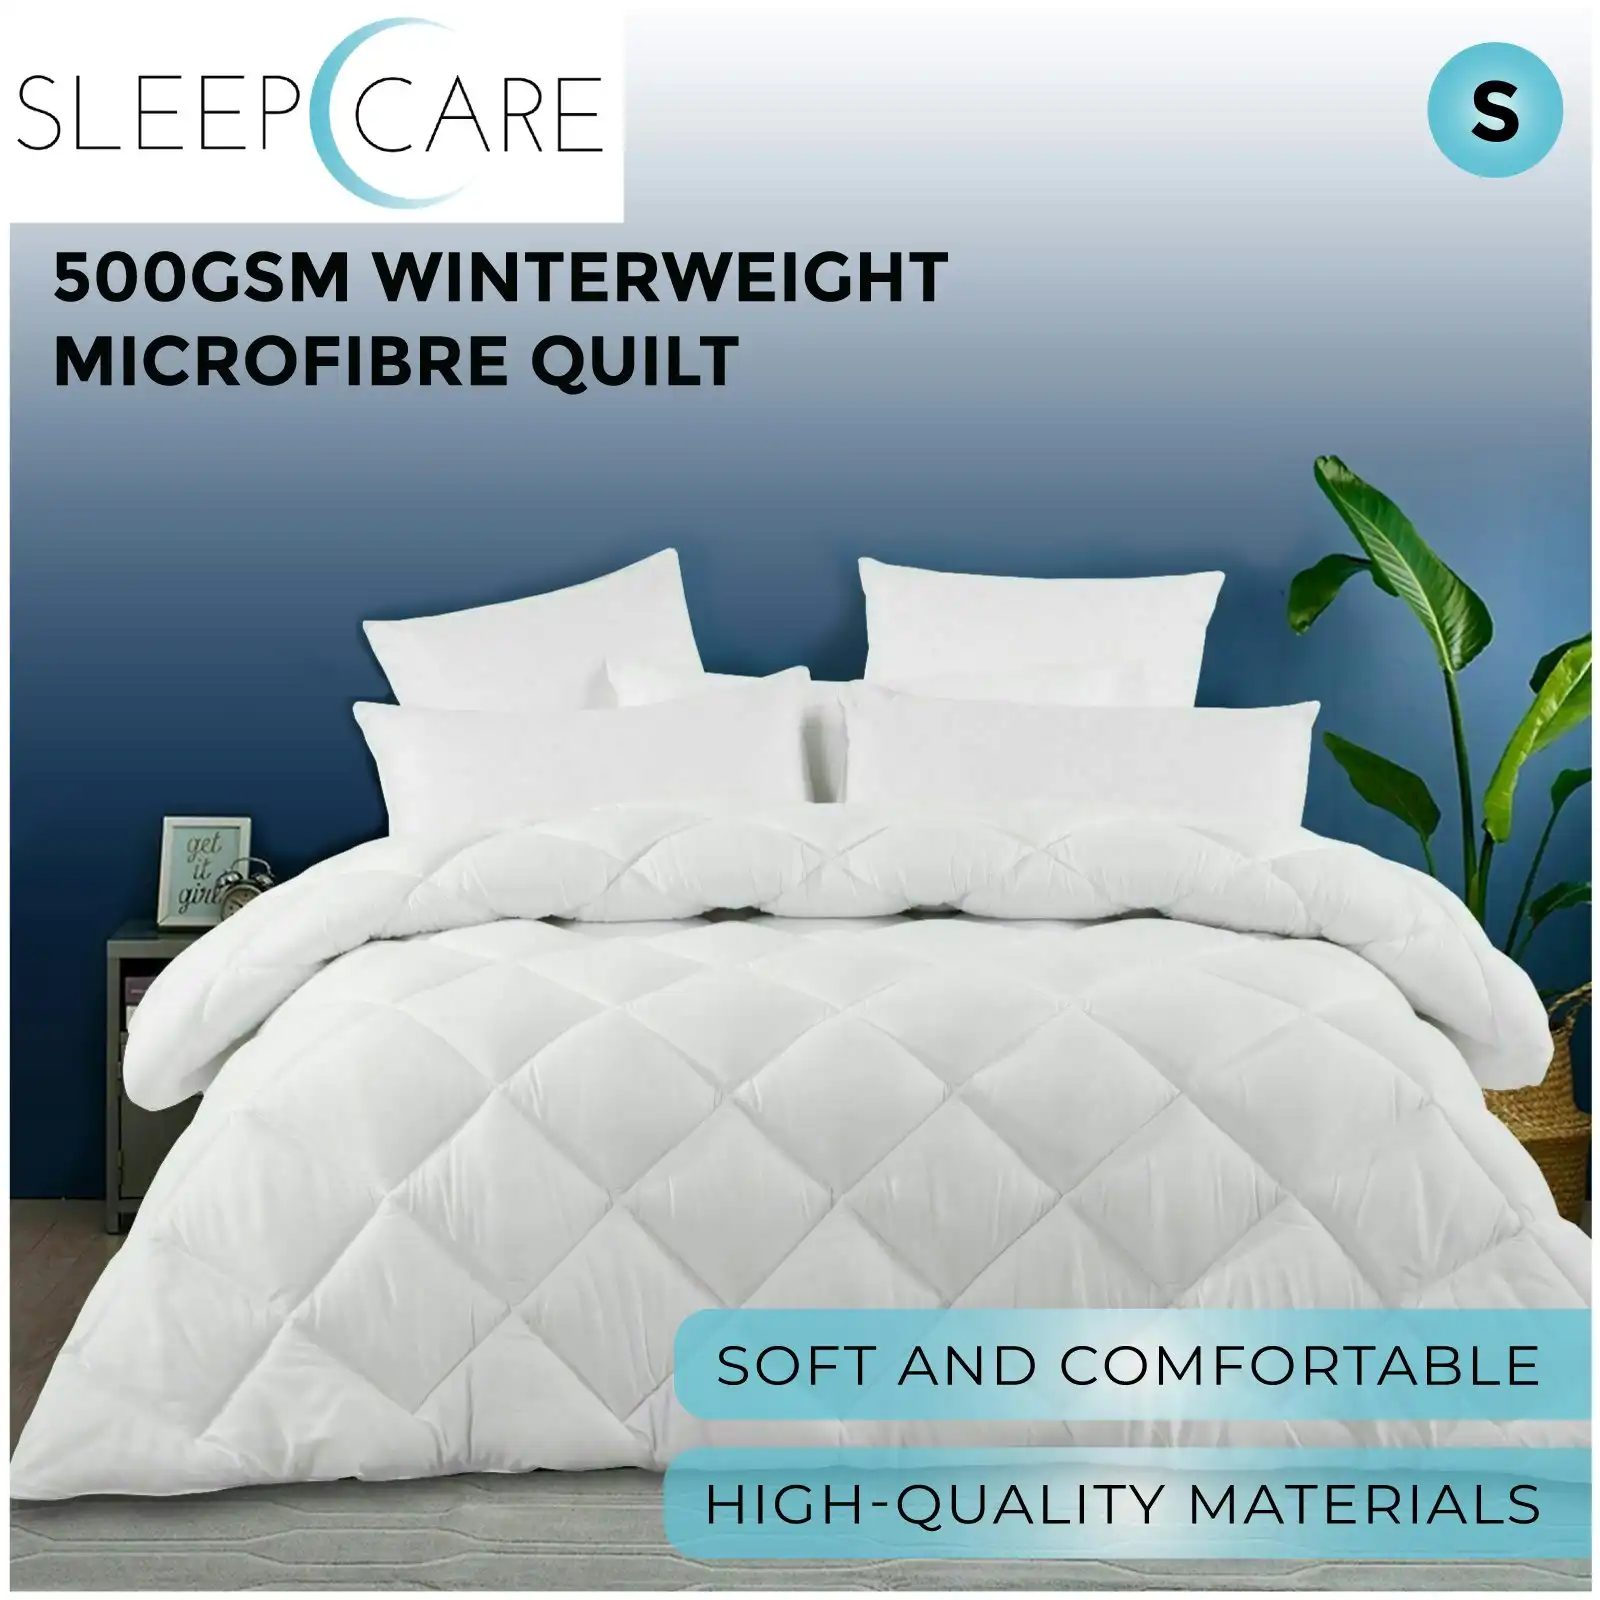 Sleepcare 500GSM Winterweight Microfibre Quilt Single Bed